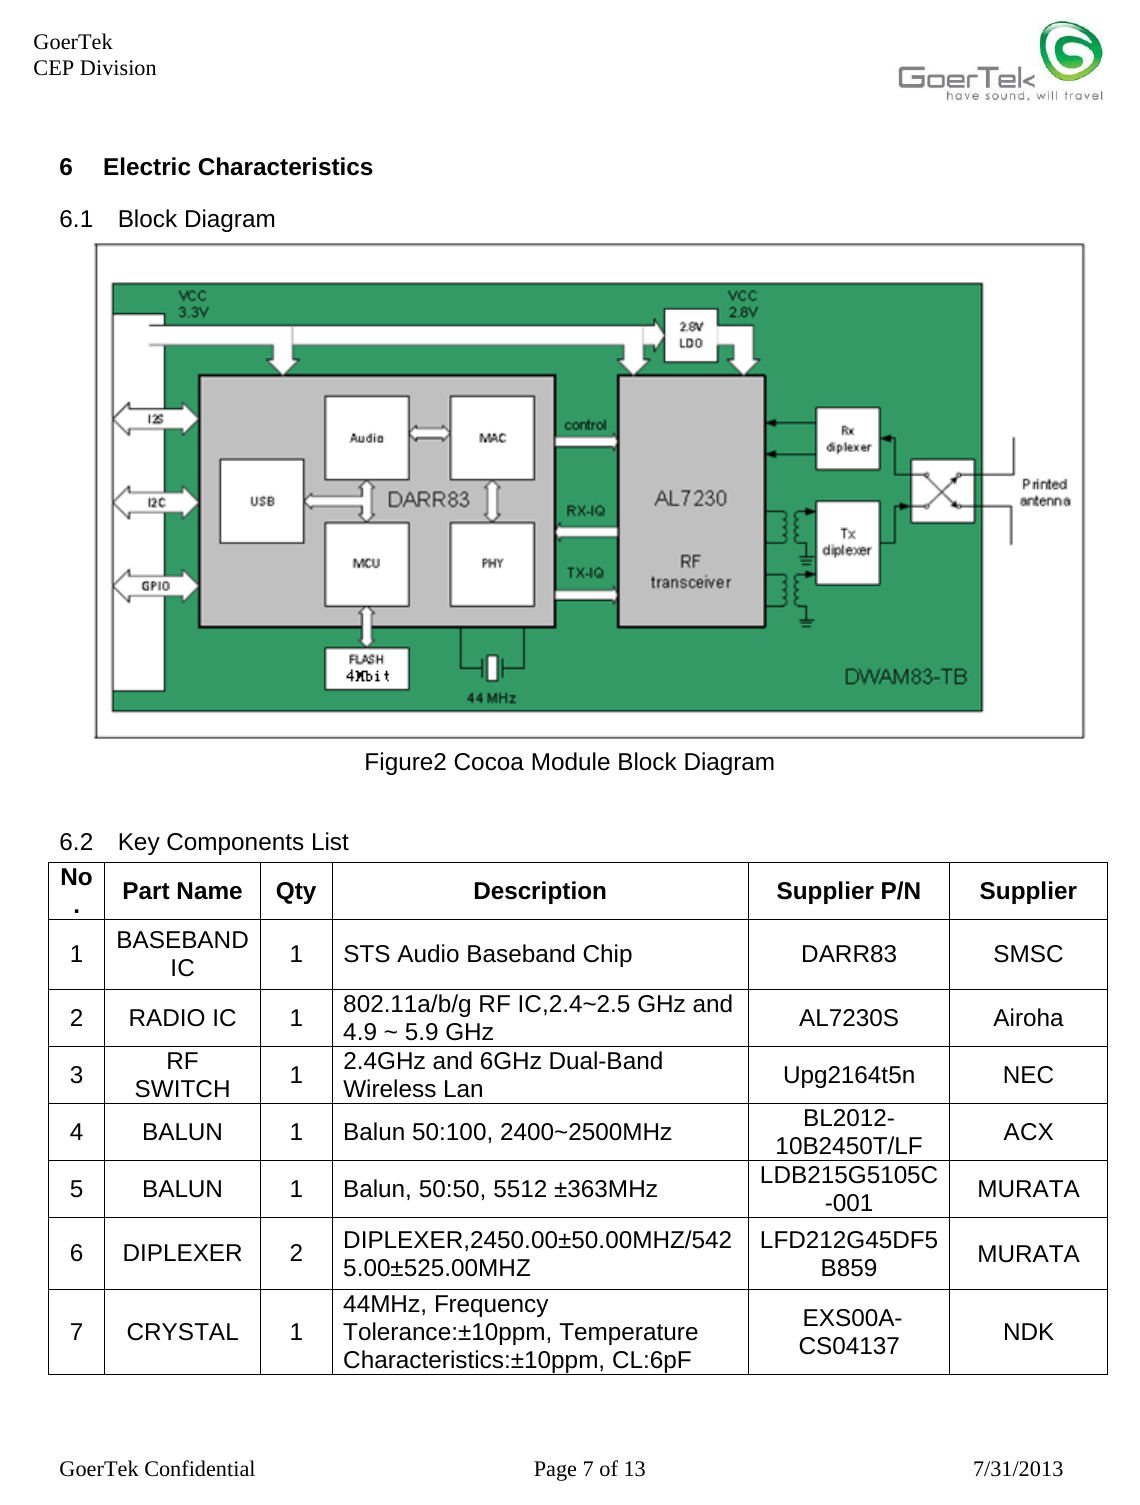     GoerTek Confidential  Page 7 of 13  7/31/2013 GoerTek  CEP Division 6 Electric Characteristics   6.1 Block Diagram  Figure2 Cocoa Module Block Diagram  6.2  Key Components List No.  Part Name  Qty  Description  Supplier P/N  Supplier 1  BASEBAND IC  1  STS Audio Baseband Chip  DARR83  SMSC 2 RADIO IC  1 802.11a/b/g RF IC,2.4~2.5 GHz and 4.9 ~ 5.9 GHz  AL7230S Airoha 3  RF SWITCH  1  2.4GHz and 6GHz Dual-Band Wireless Lan  Upg2164t5n NEC 4  BALUN  1  Balun 50:100, 2400~2500MHz  BL2012-10B2450T/LF  ACX 5  BALUN  1  Balun, 50:50, 5512 ±363MHz  LDB215G5105C-001  MURATA 6 DIPLEXER  2 DIPLEXER,2450.00±50.00MHZ/5425.00±525.00MHZ  LFD212G45DF5B859  MURATA 7 CRYSTAL  1 44MHz, Frequency Tolerance:±10ppm, Temperature Characteristics:±10ppm, CL:6pF  EXS00A-CS04137  NDK 